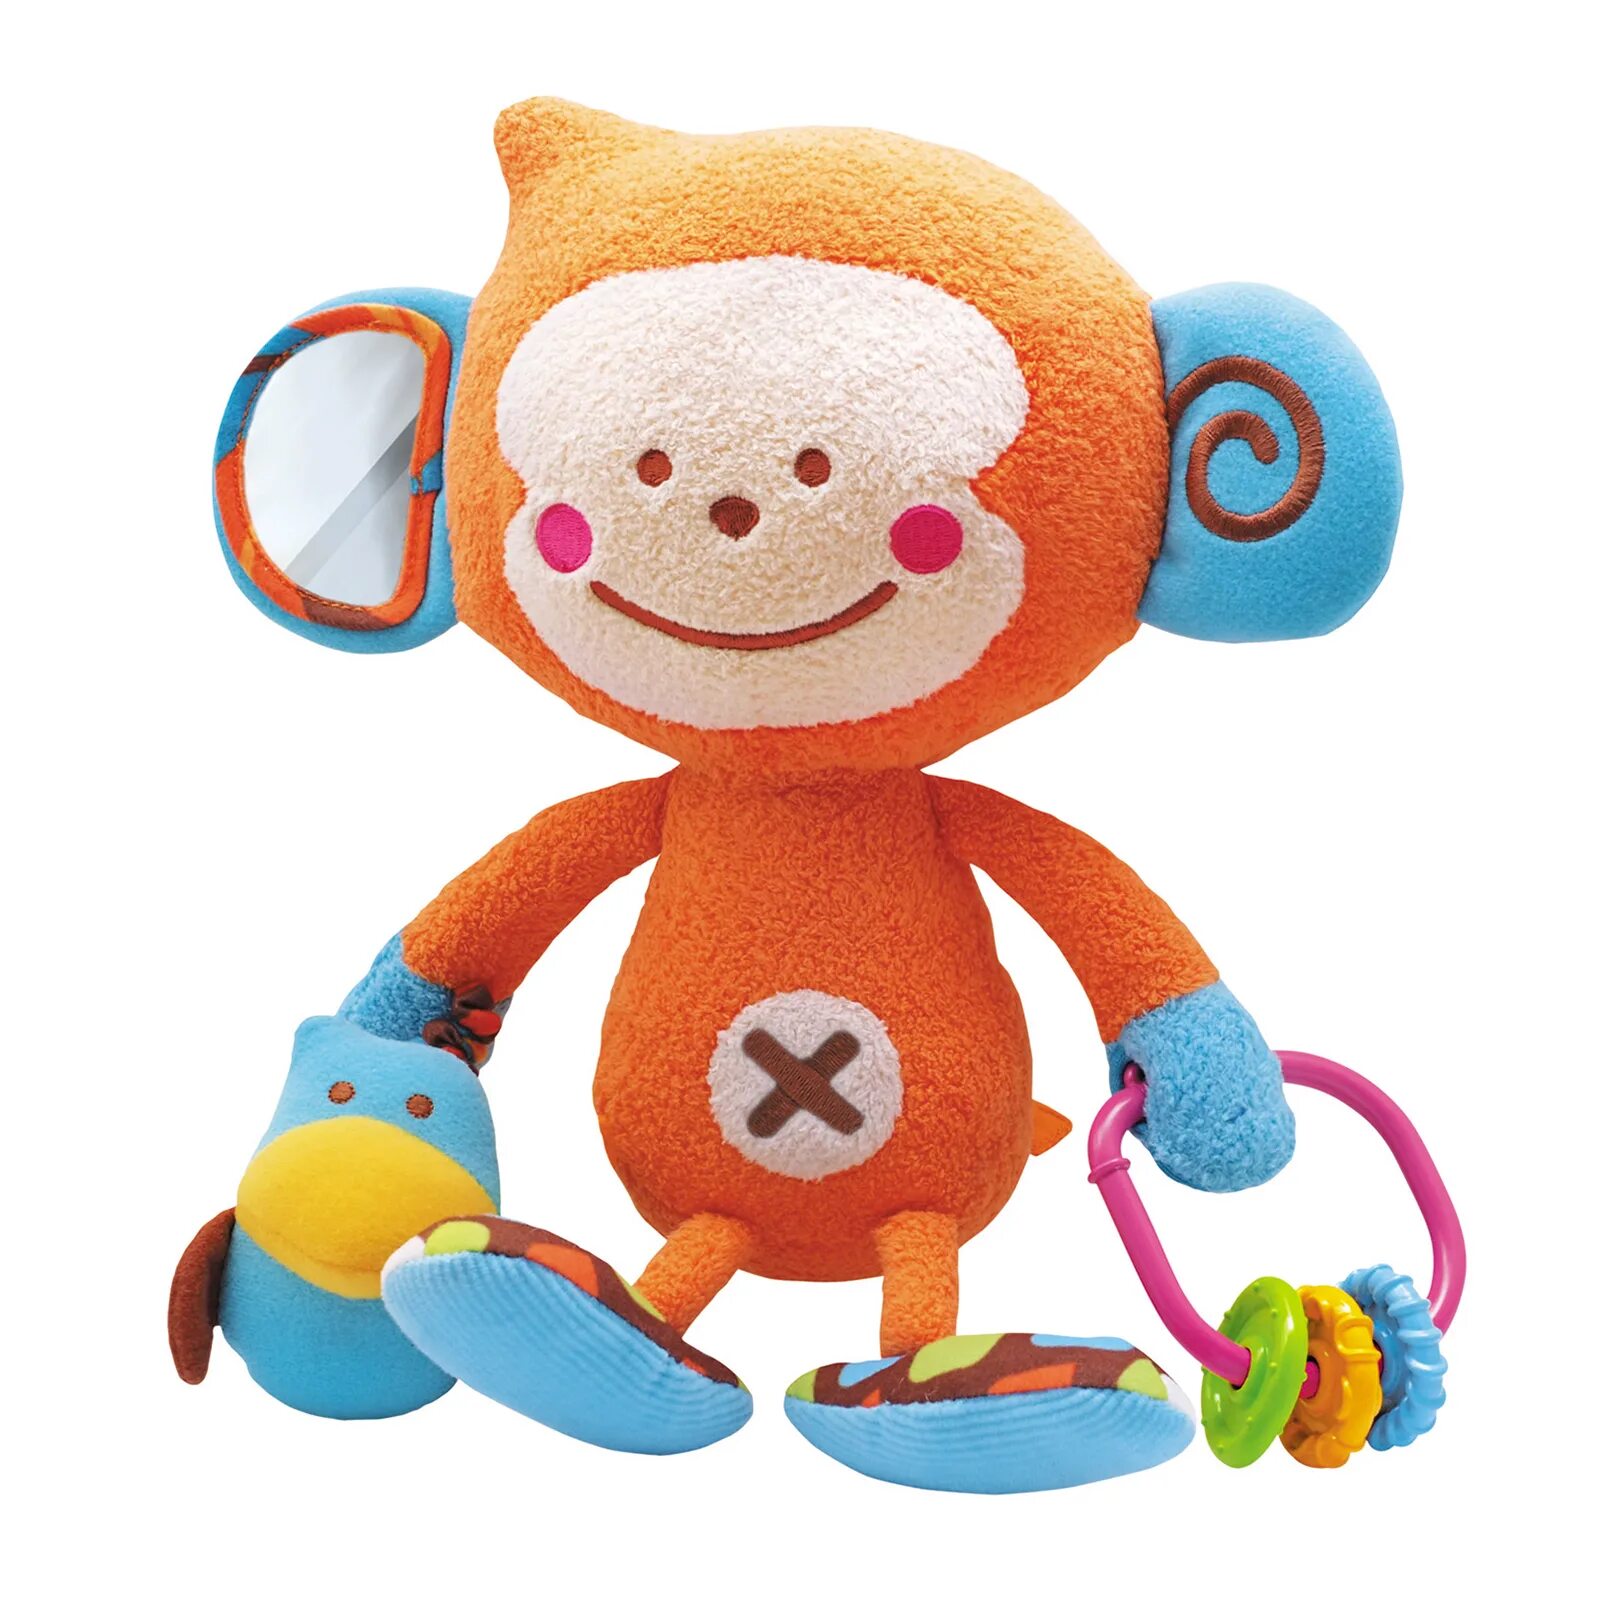 BKIDS подвеска обезьянка. Blue Box Toys обезьянка. Обезьянка развивающая игрушка подвесная. Обезьянка Bibi. Обезьянка bibi из вьетнама